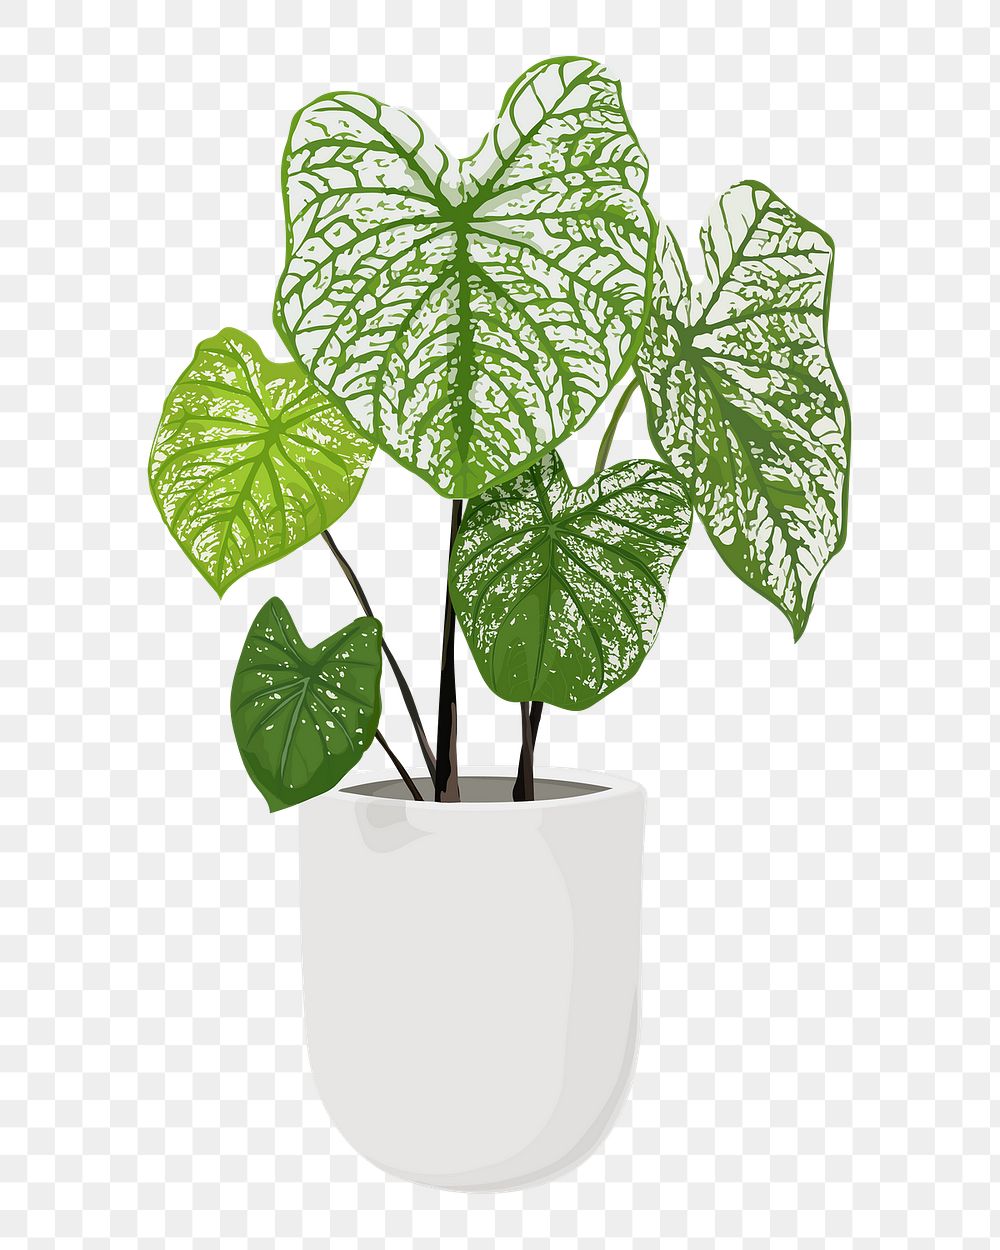 Plant PNG sticker, Alocasia polly